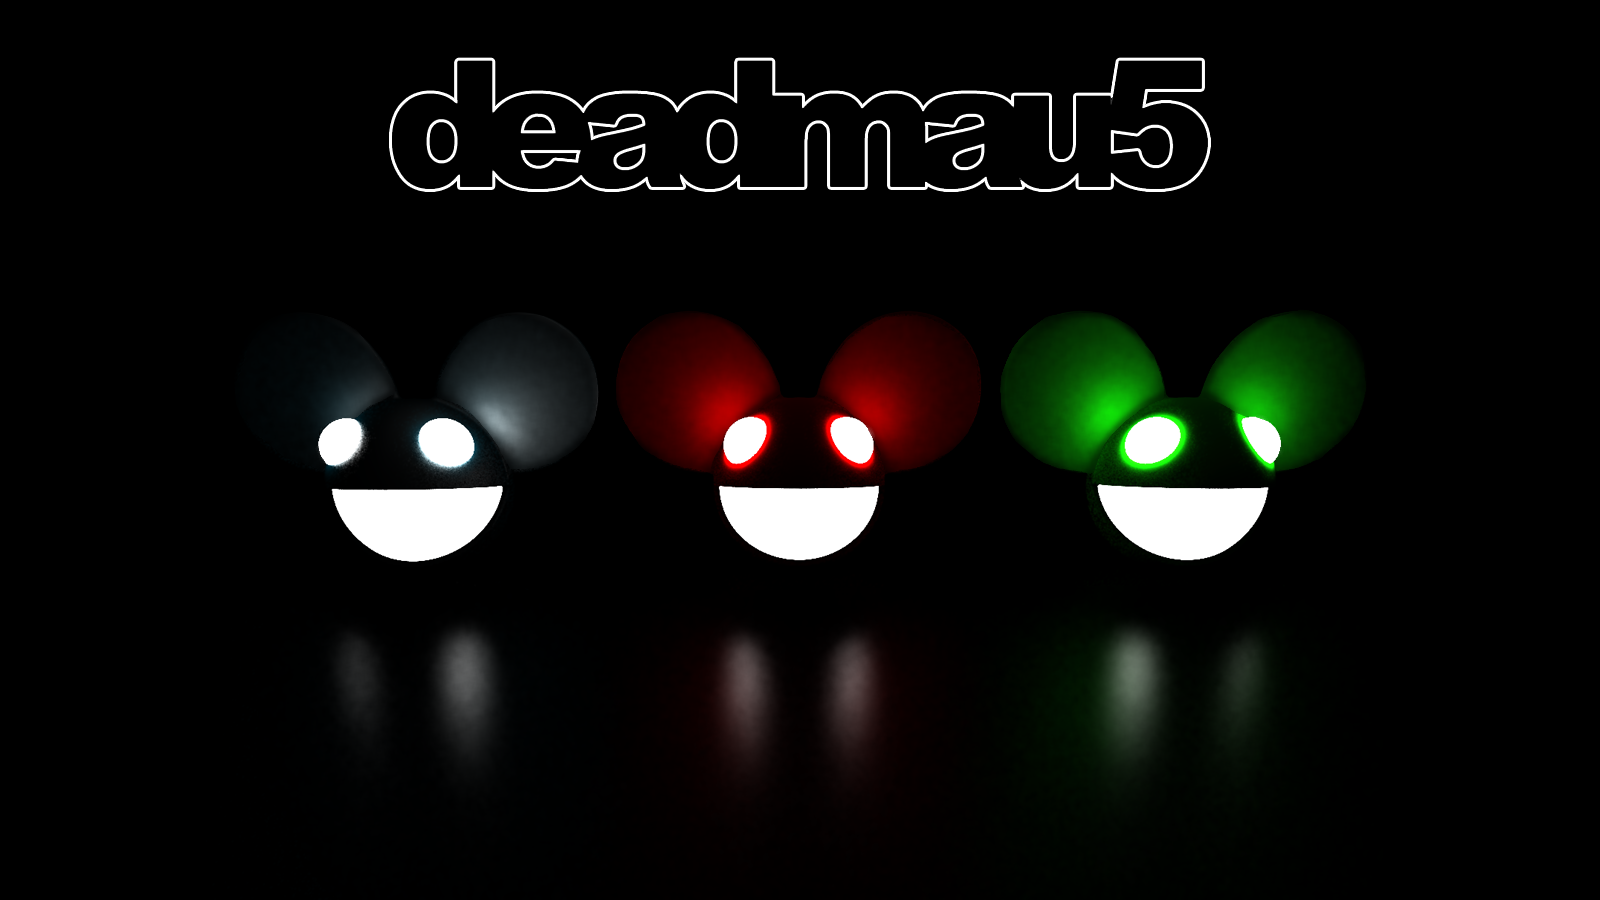 Dead Mouse Dj Logo Conocido O Deadmau5